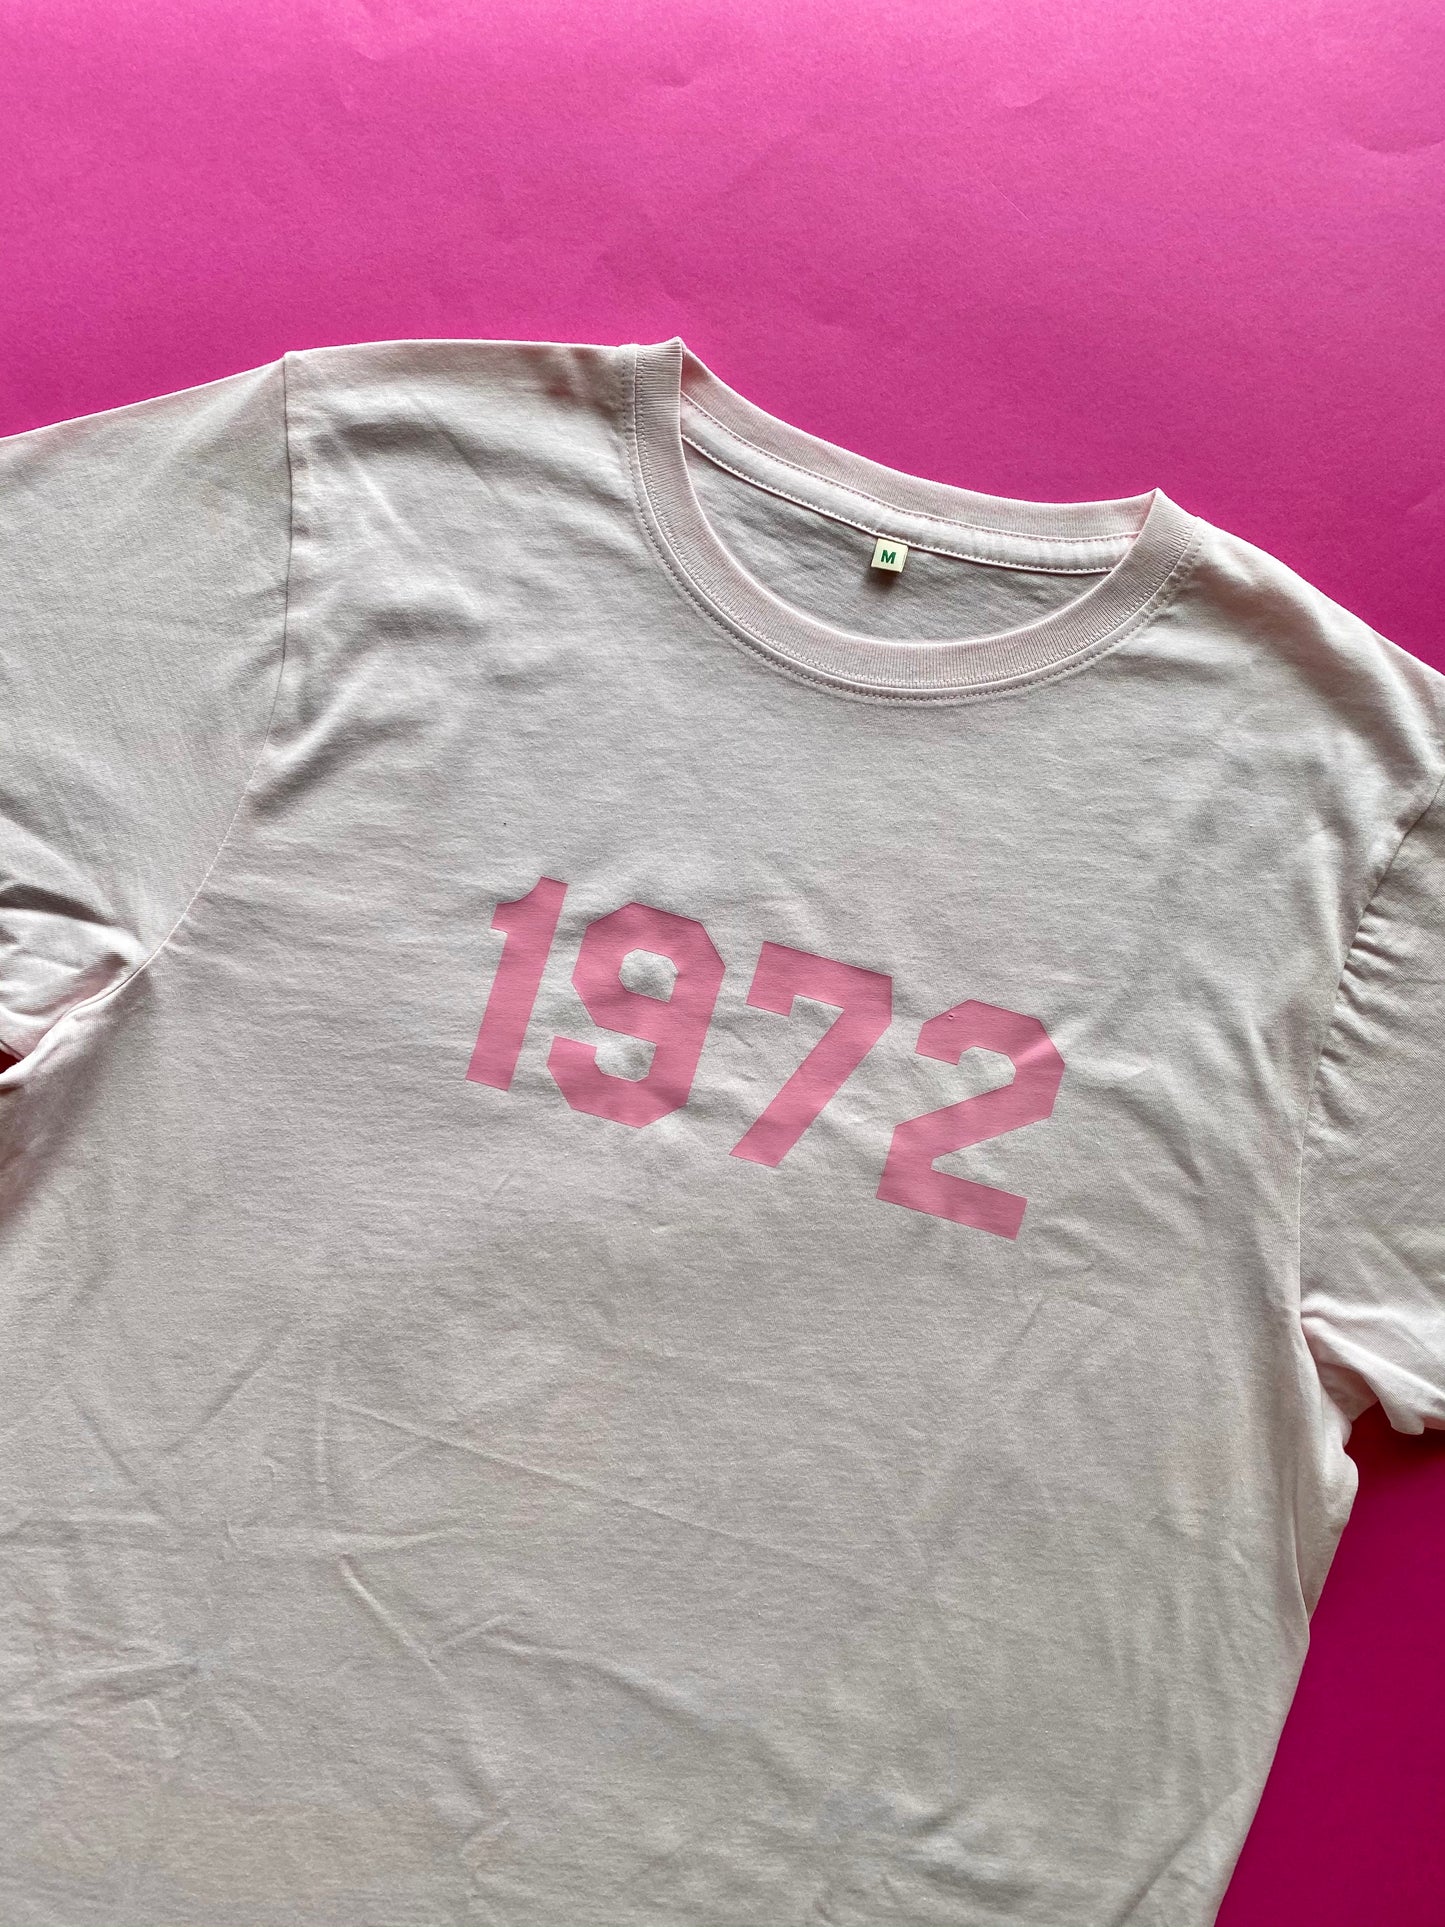 M 1972 pale pink year t-shirt